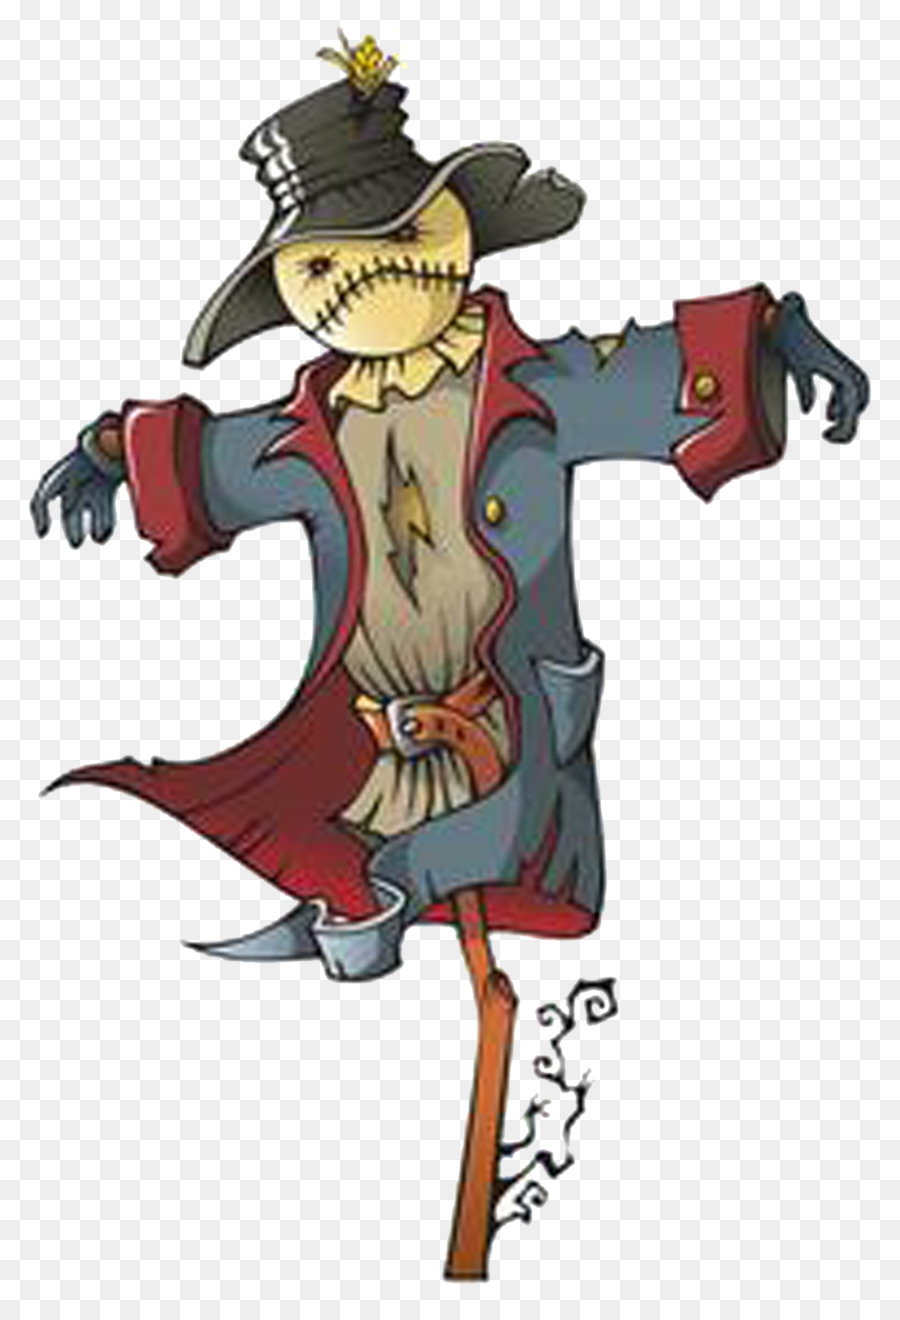 Cartoon Scarecrow Stock-illustration Illustration - Dämon Vogelscheuche